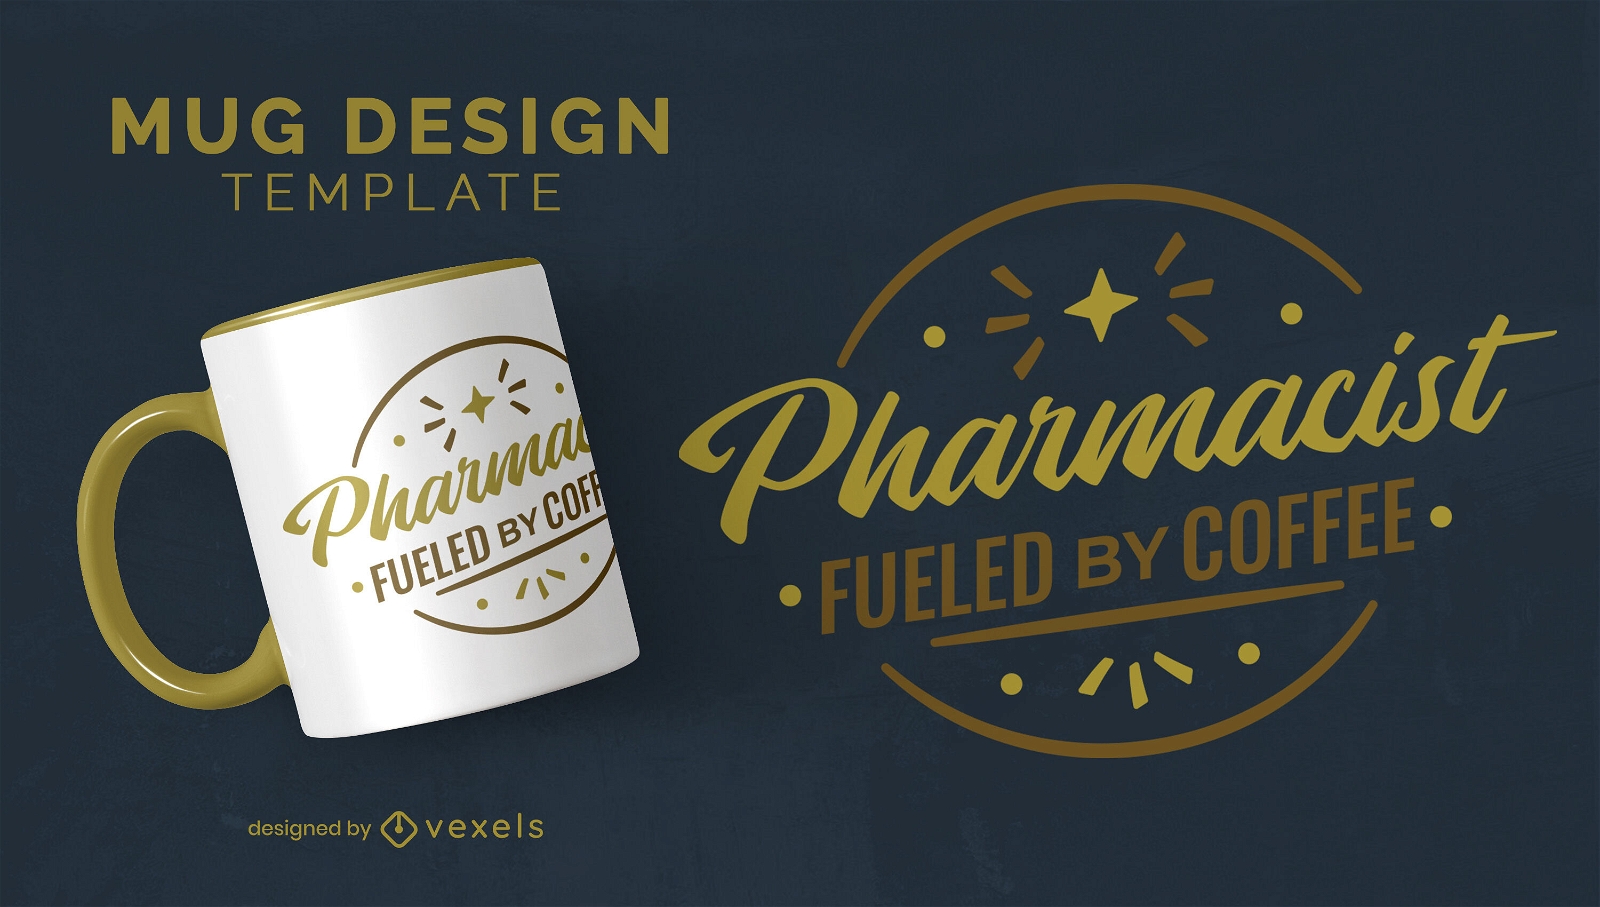 Pharmacist fueled by coffee mug design